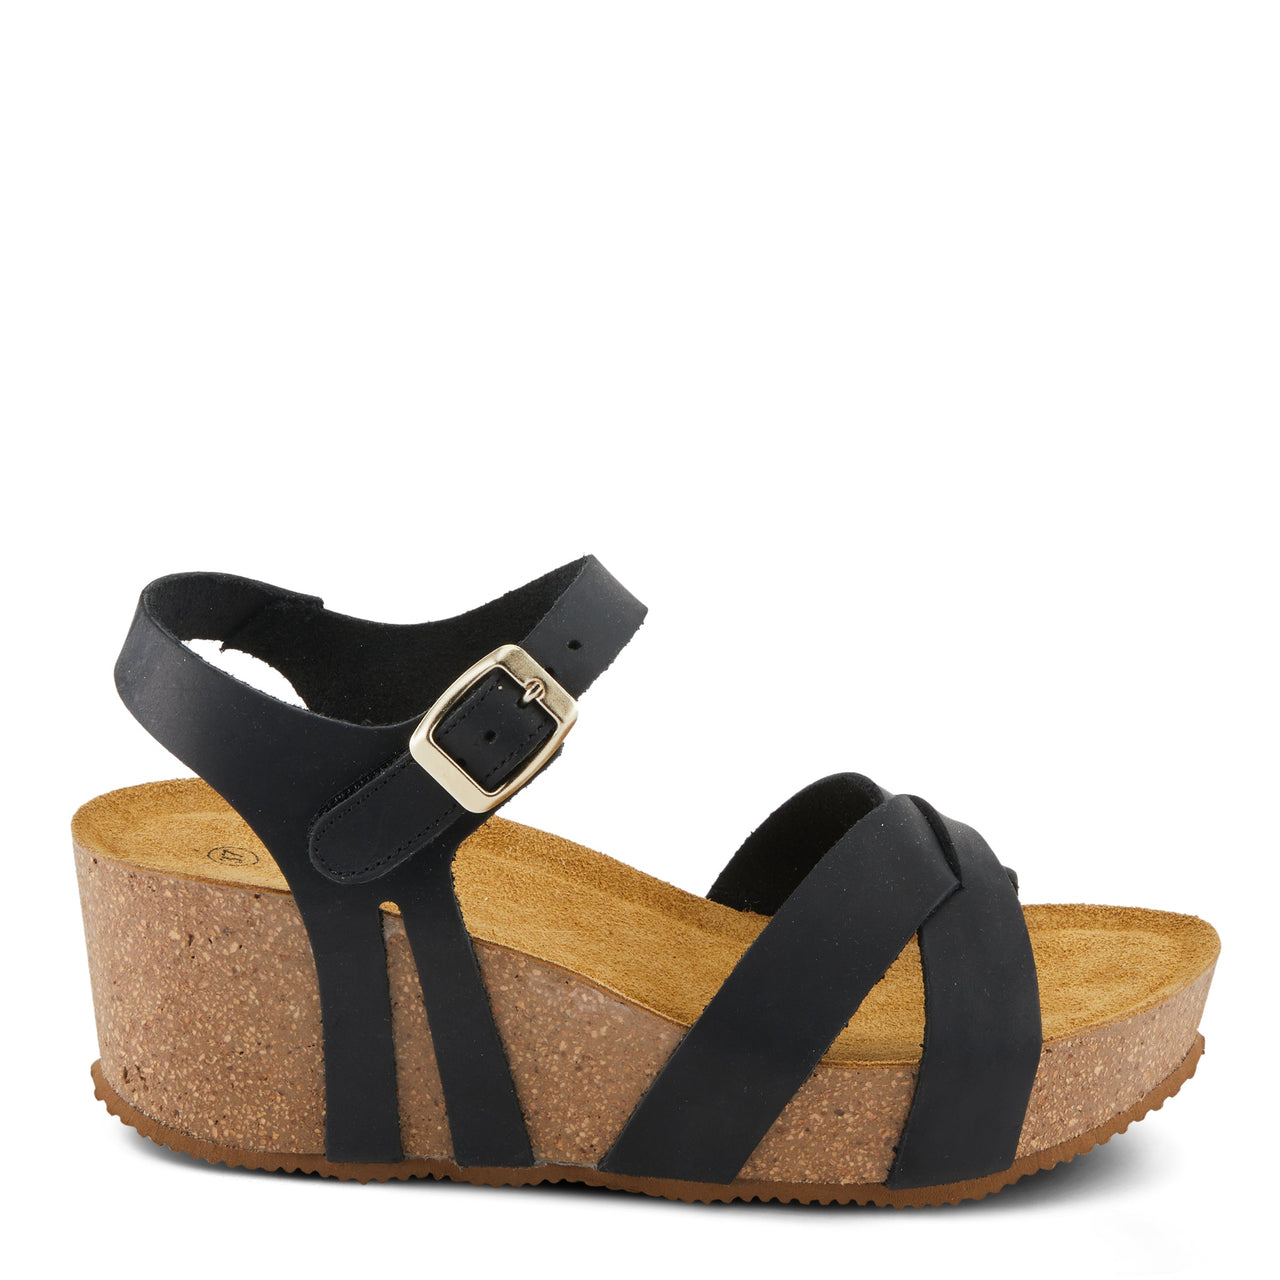 Spring Step Burton Sandals, Women's Leather Adjustable Strap Slip-On Shoes in Black, Brown, or Tan